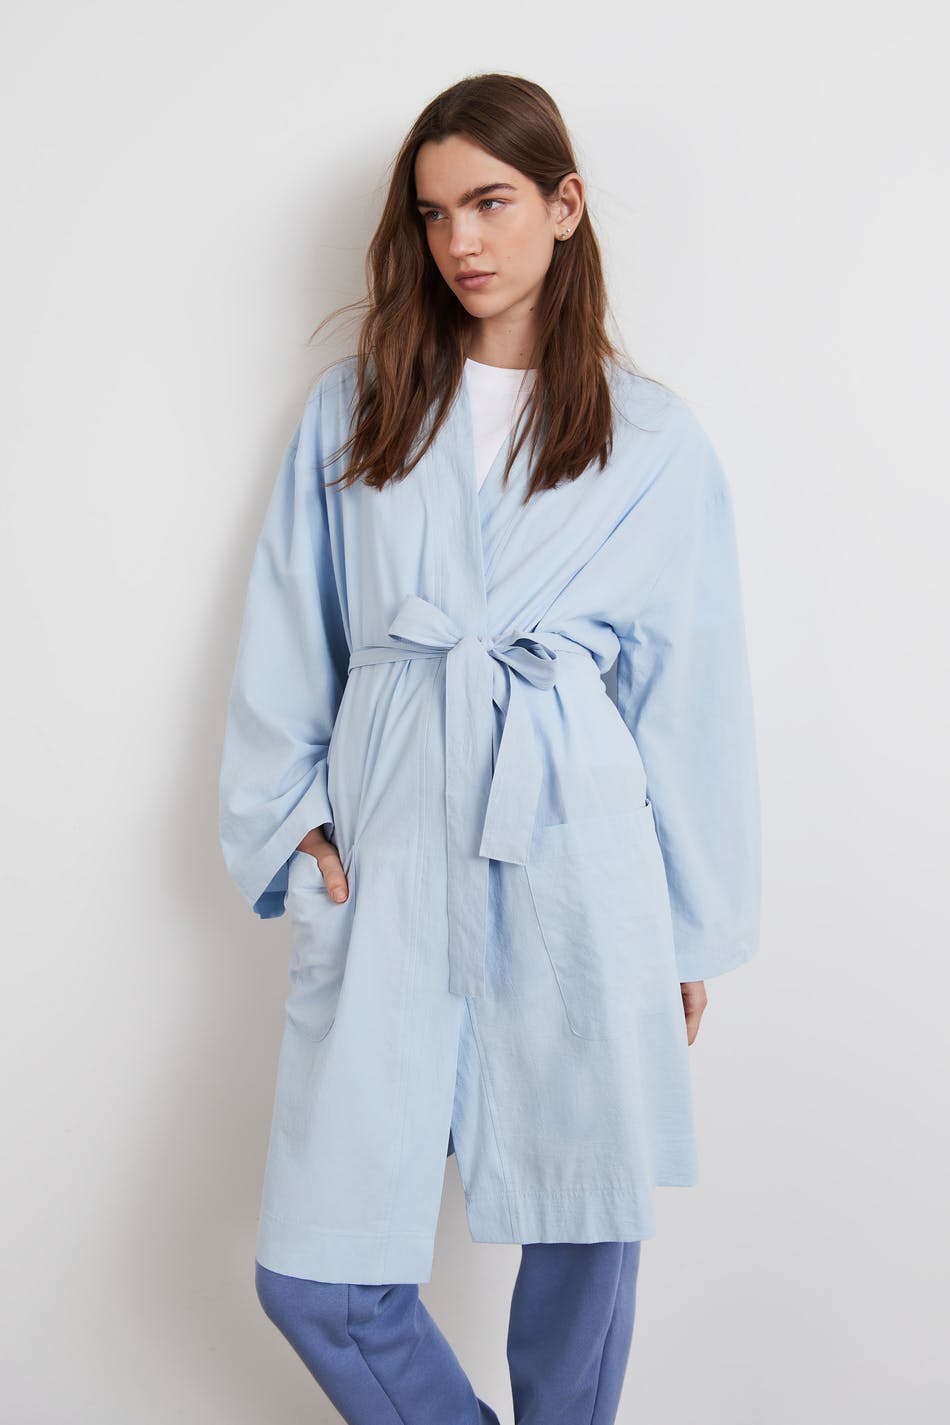 Gina Tricot - Gina Home Robe - Pyjamas - Blau - S/M - Damen